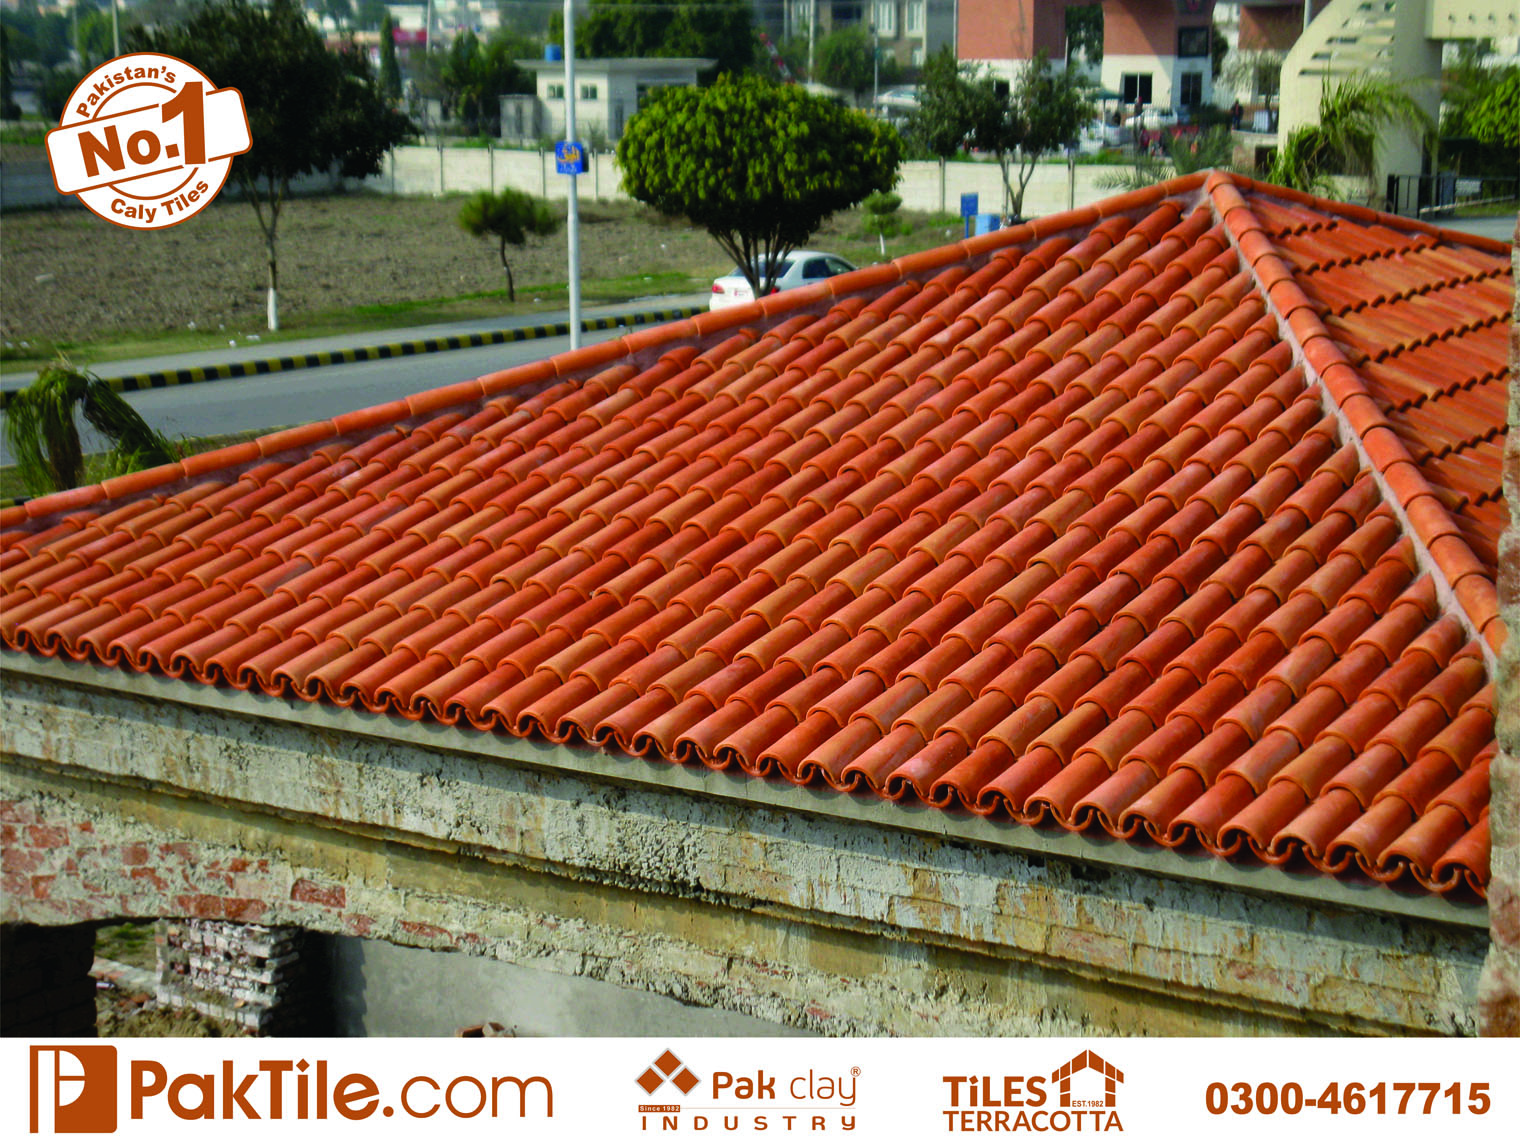 13 Pak clay buy terracotta glazed ceramic Interlocking roof shingles khaprail tiles in pakistan image